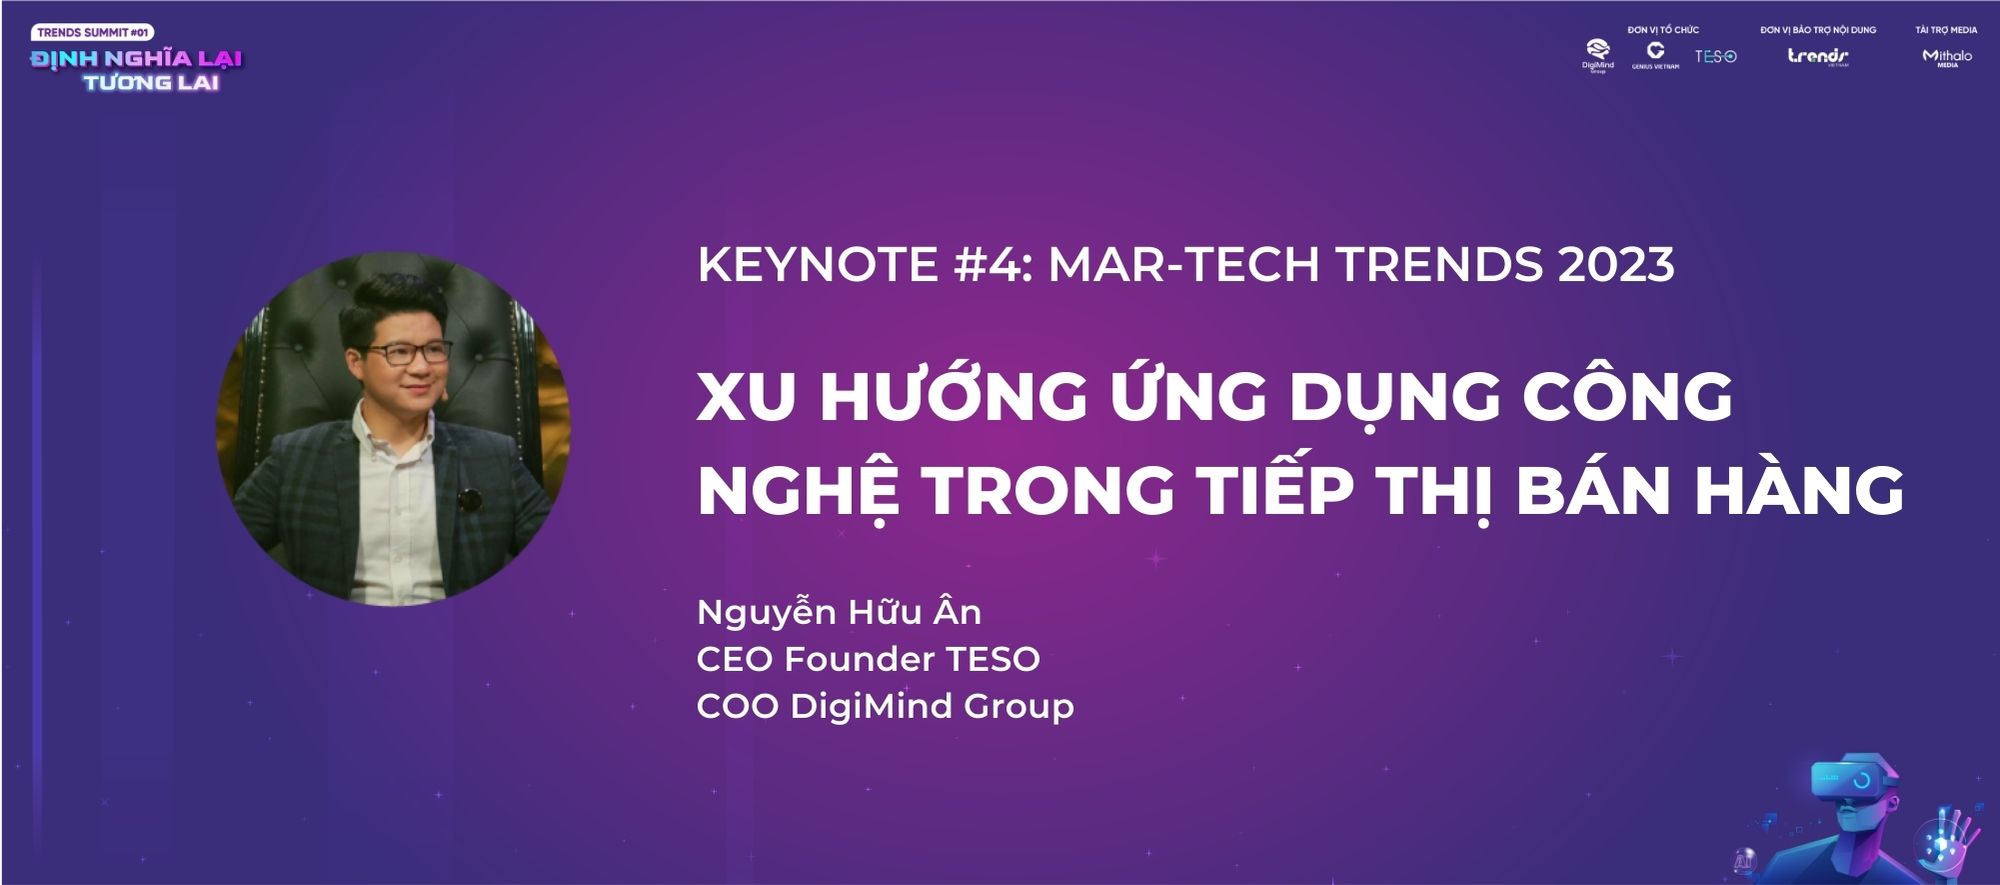 Ông Nguyễn Hữu Ân - Founder & CEO of TESO.